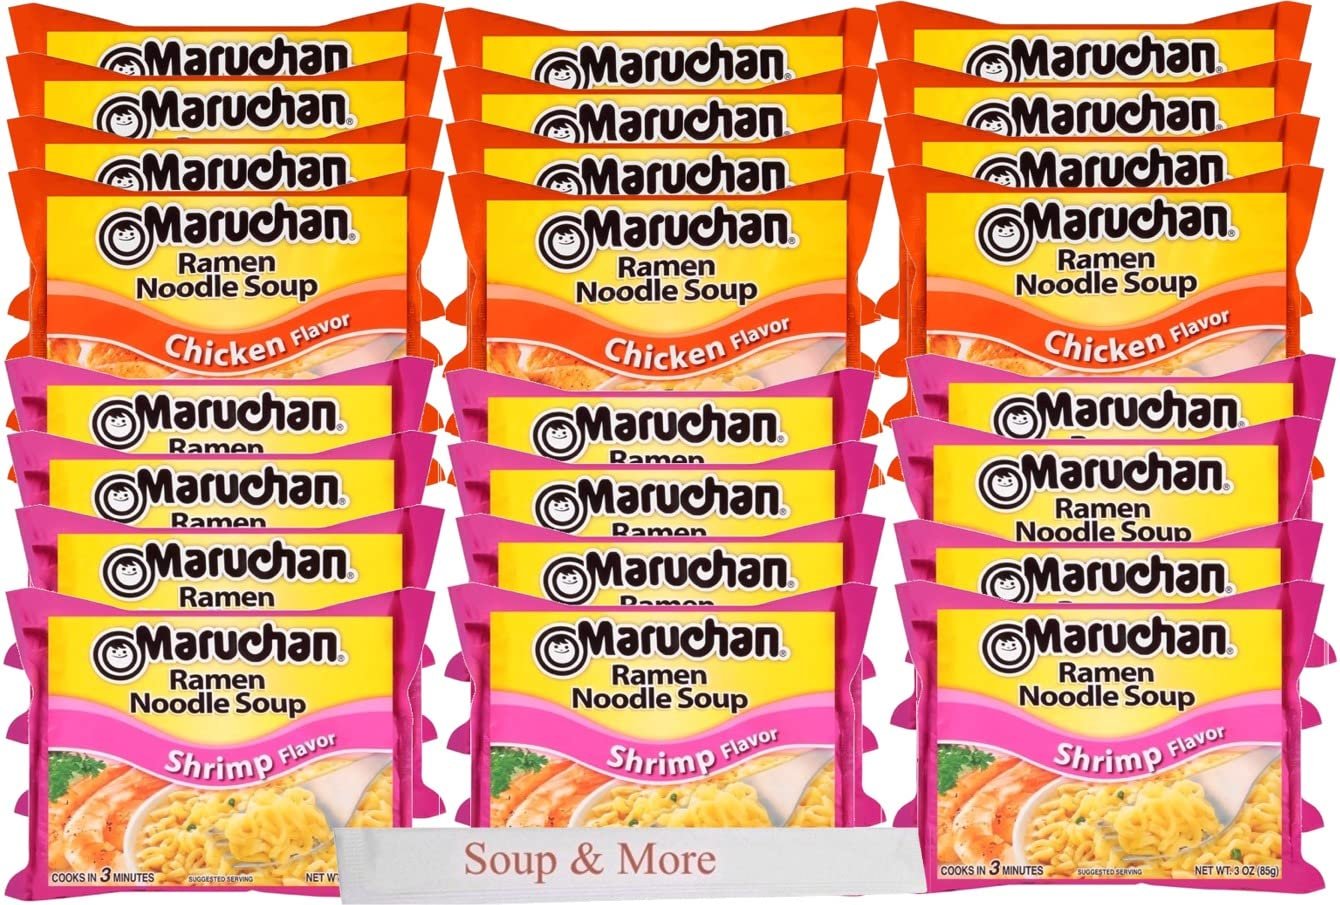 Maruchan Ramen Instant Soup Noodles 24 Count - 12 Shrimp Flavor & 12 Chicken Flavor Lunch / Dinner Variety, 2 Flavors